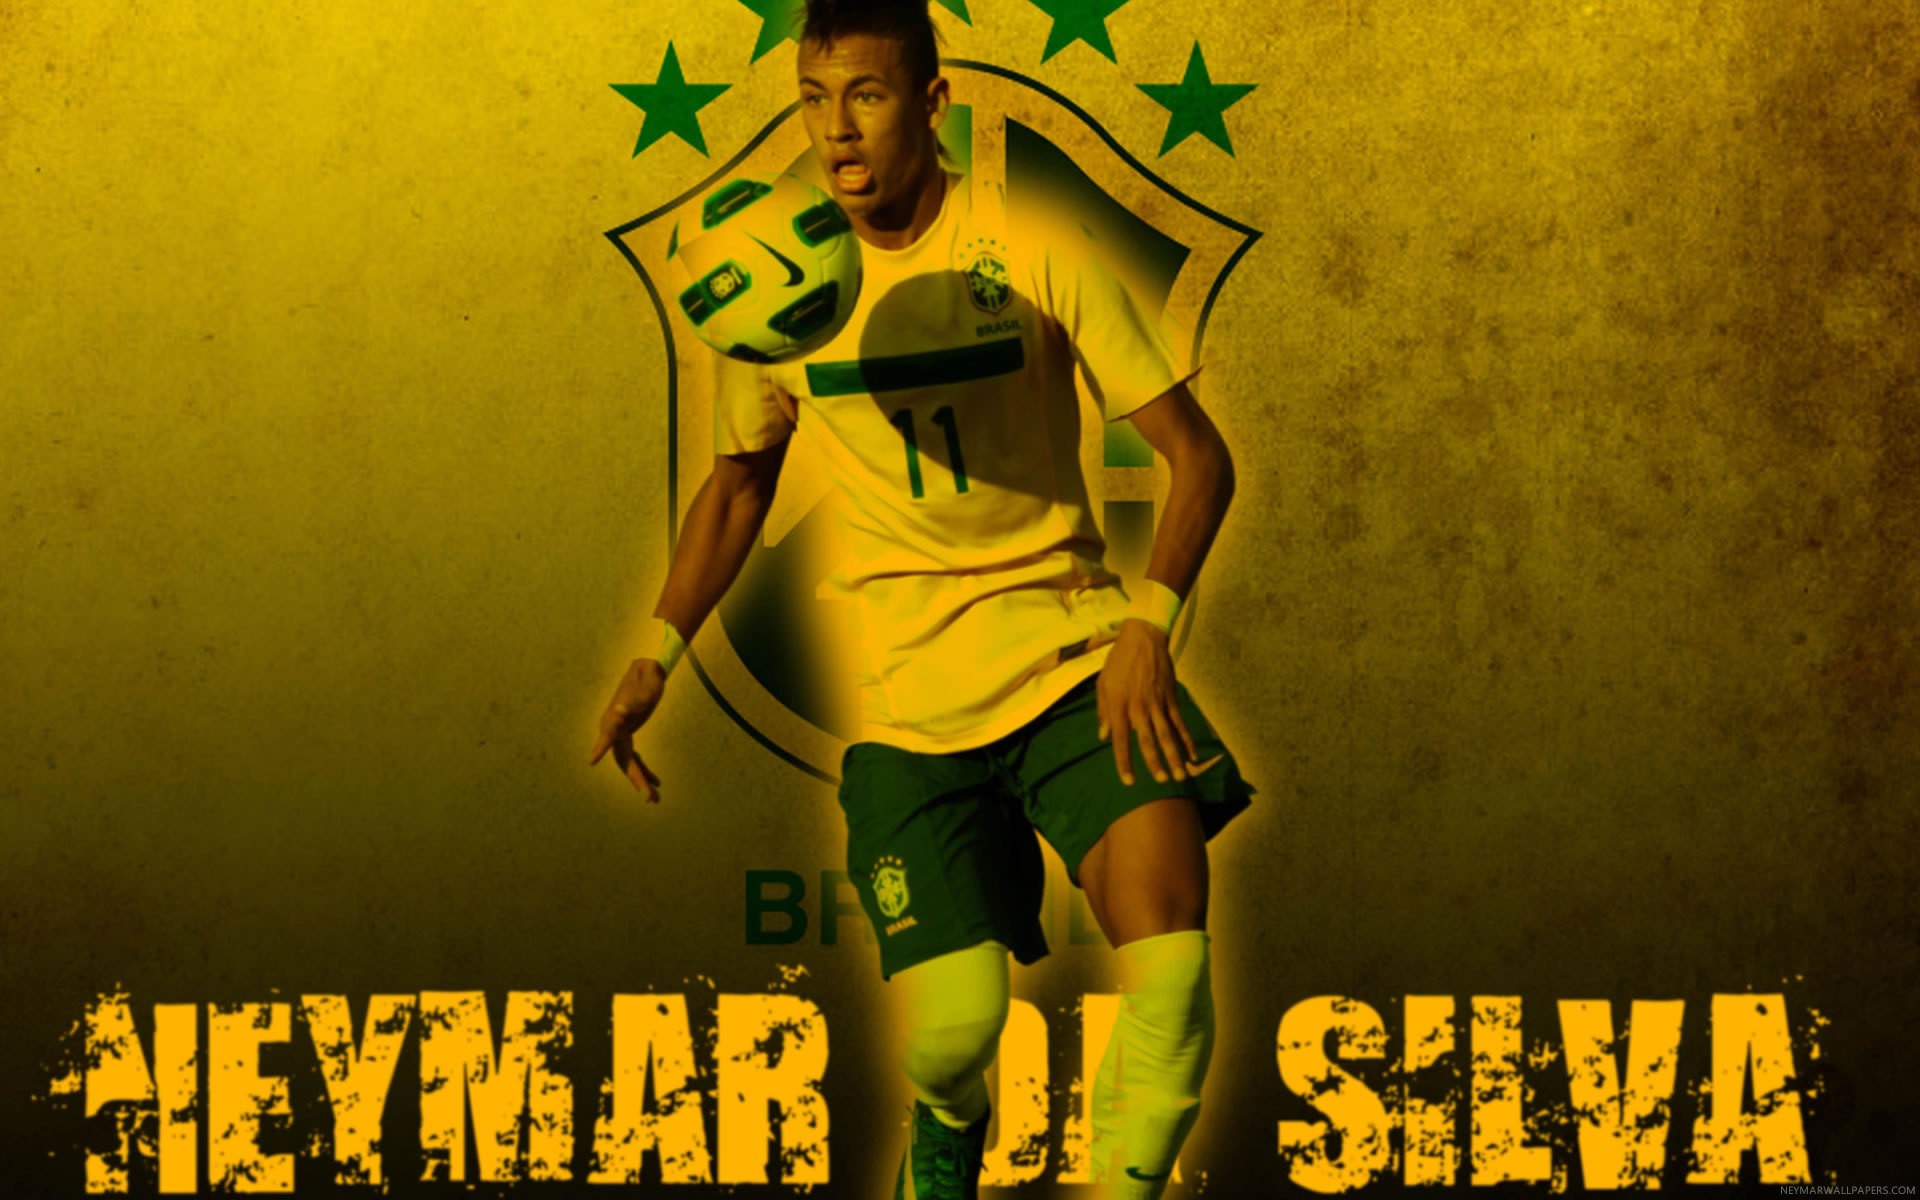 Neymar wallpaper (9)